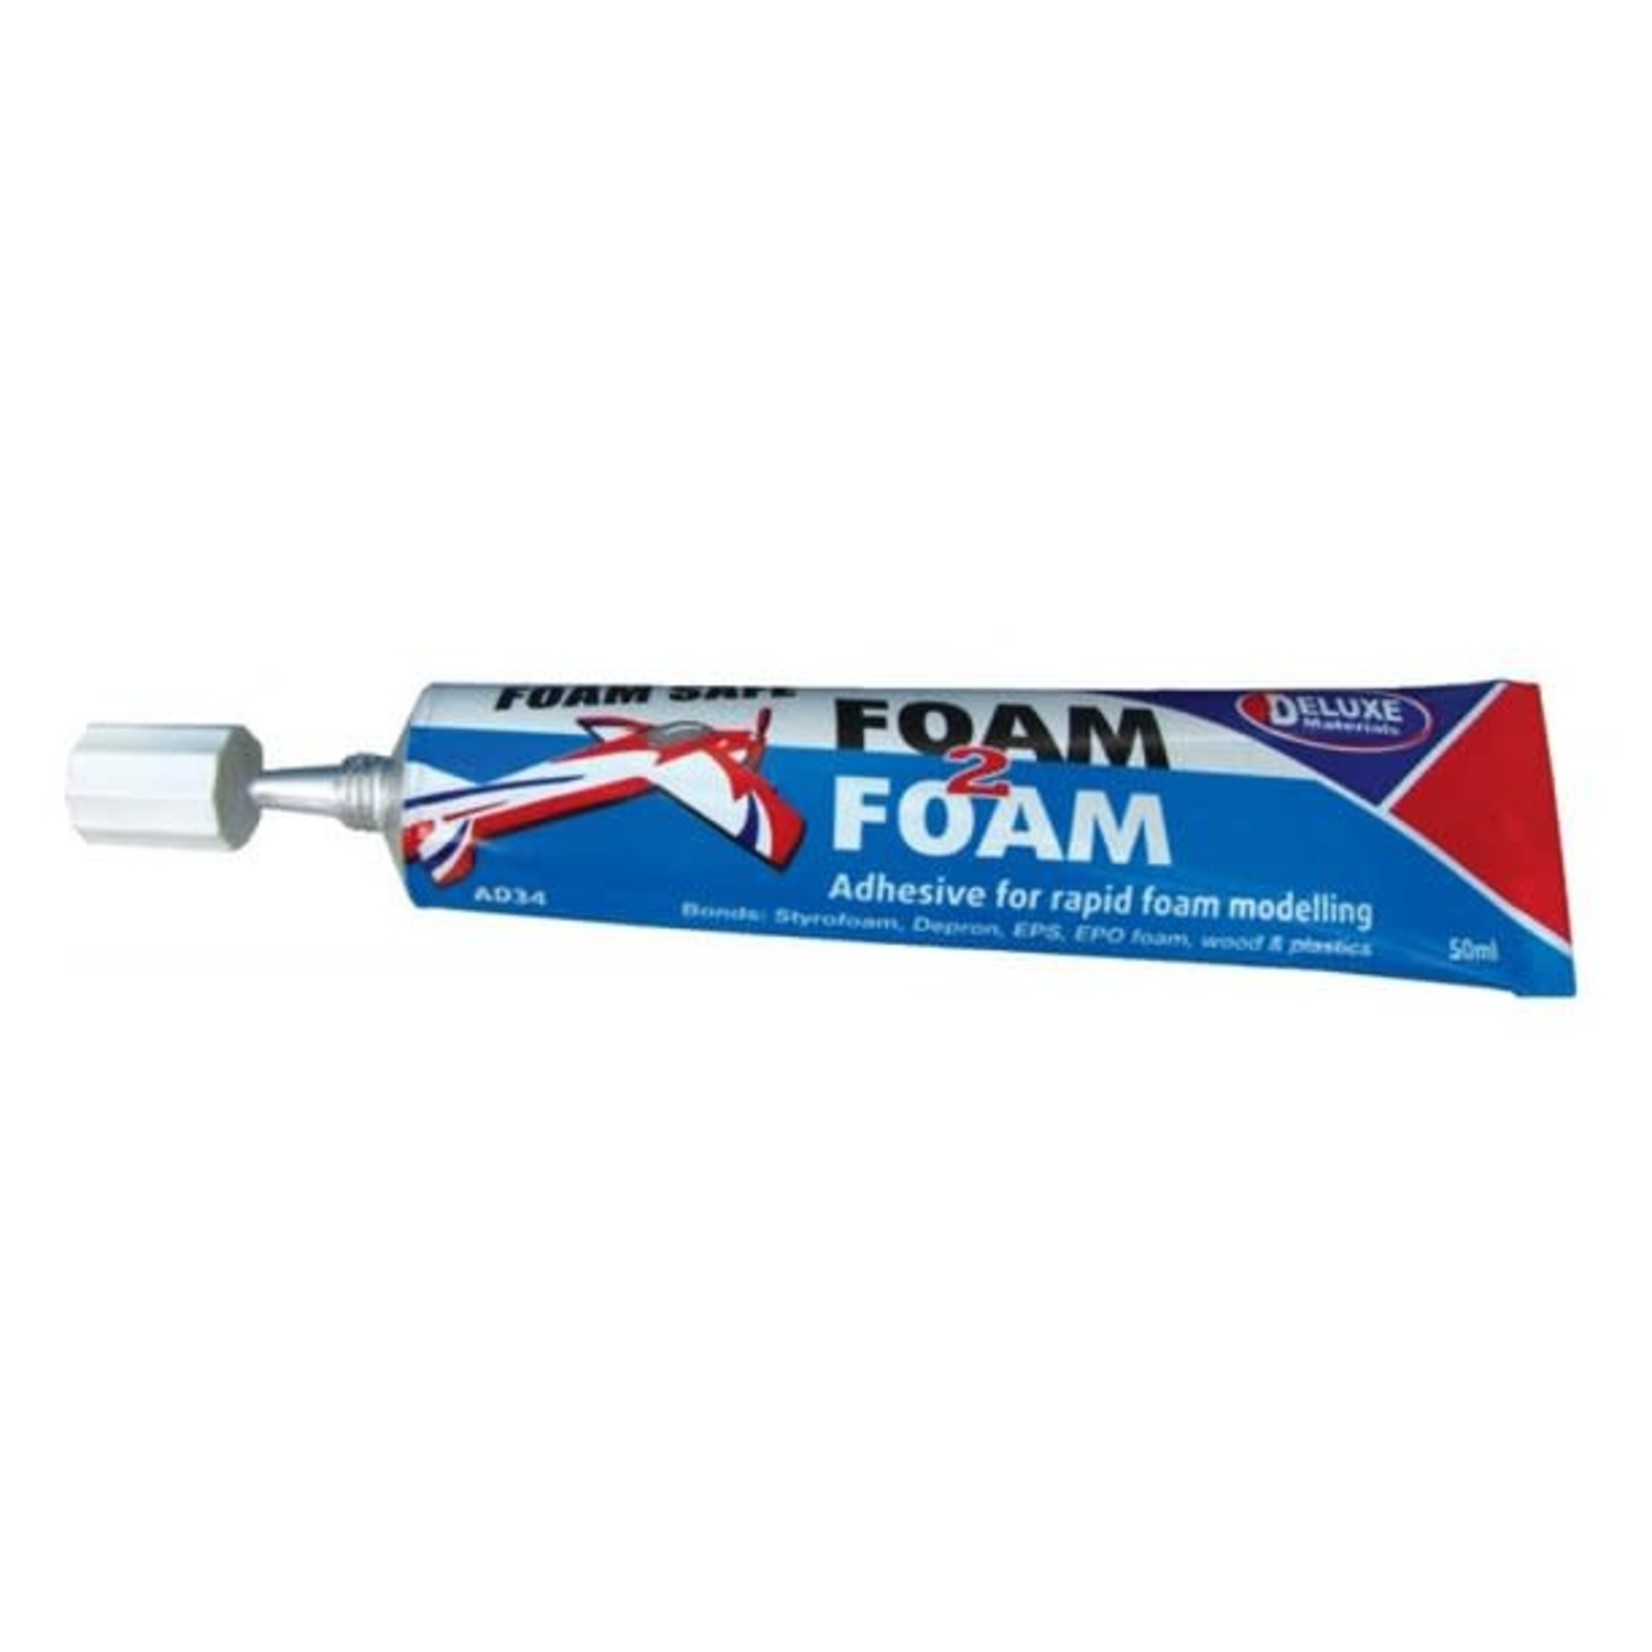 Deluxe Materials Foam 2 Foam, Foam Safe Glue 50ml: EPO, EPS, Wood